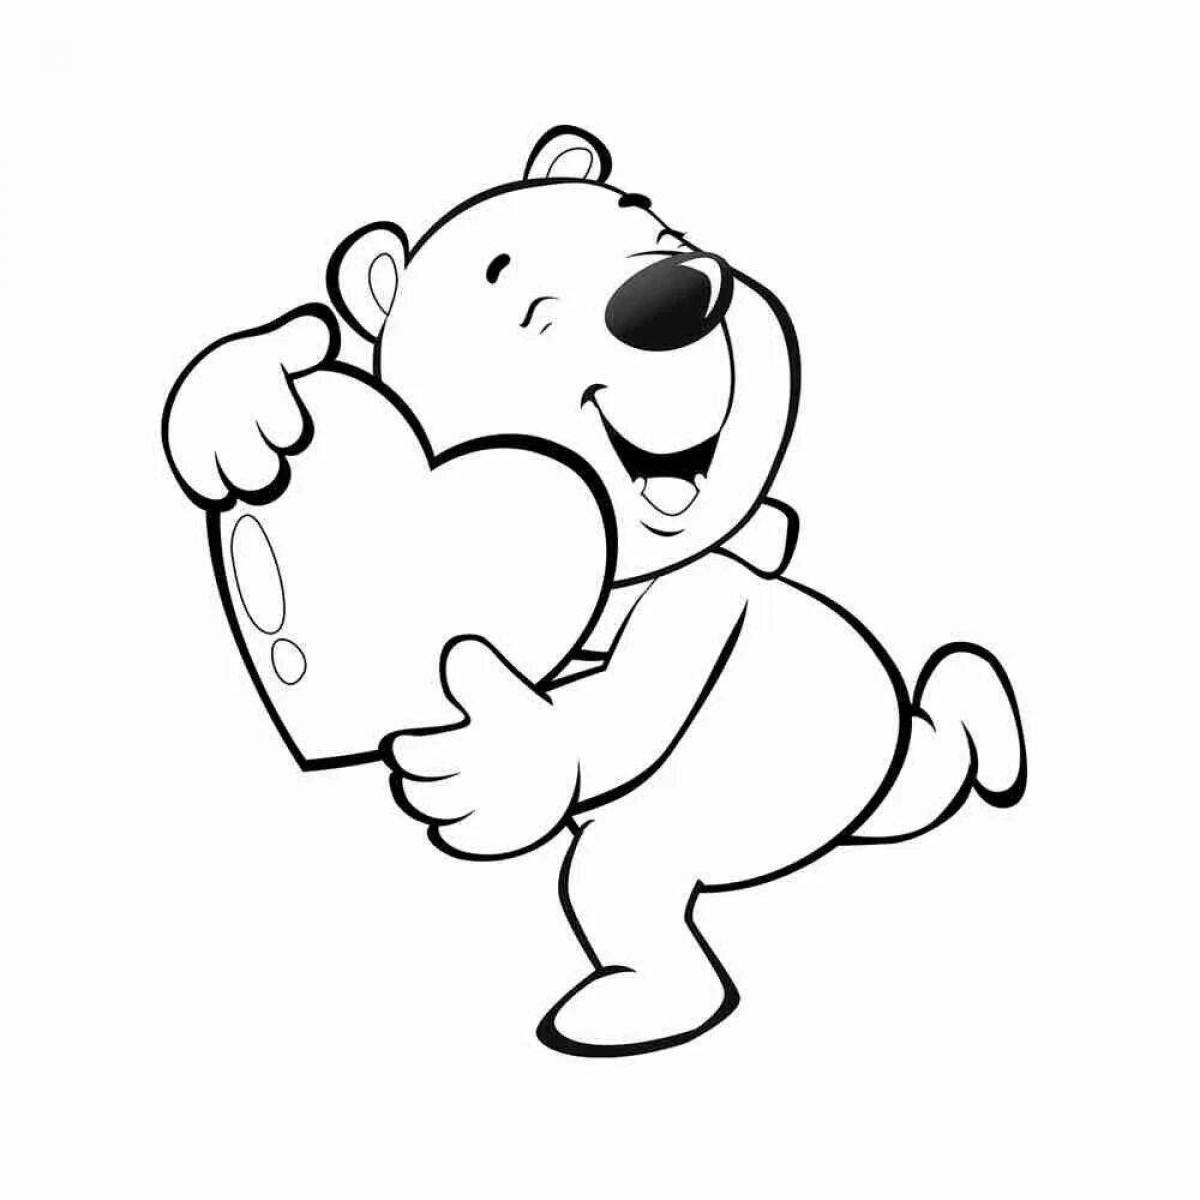 Fun teddy bear with heart coloring book